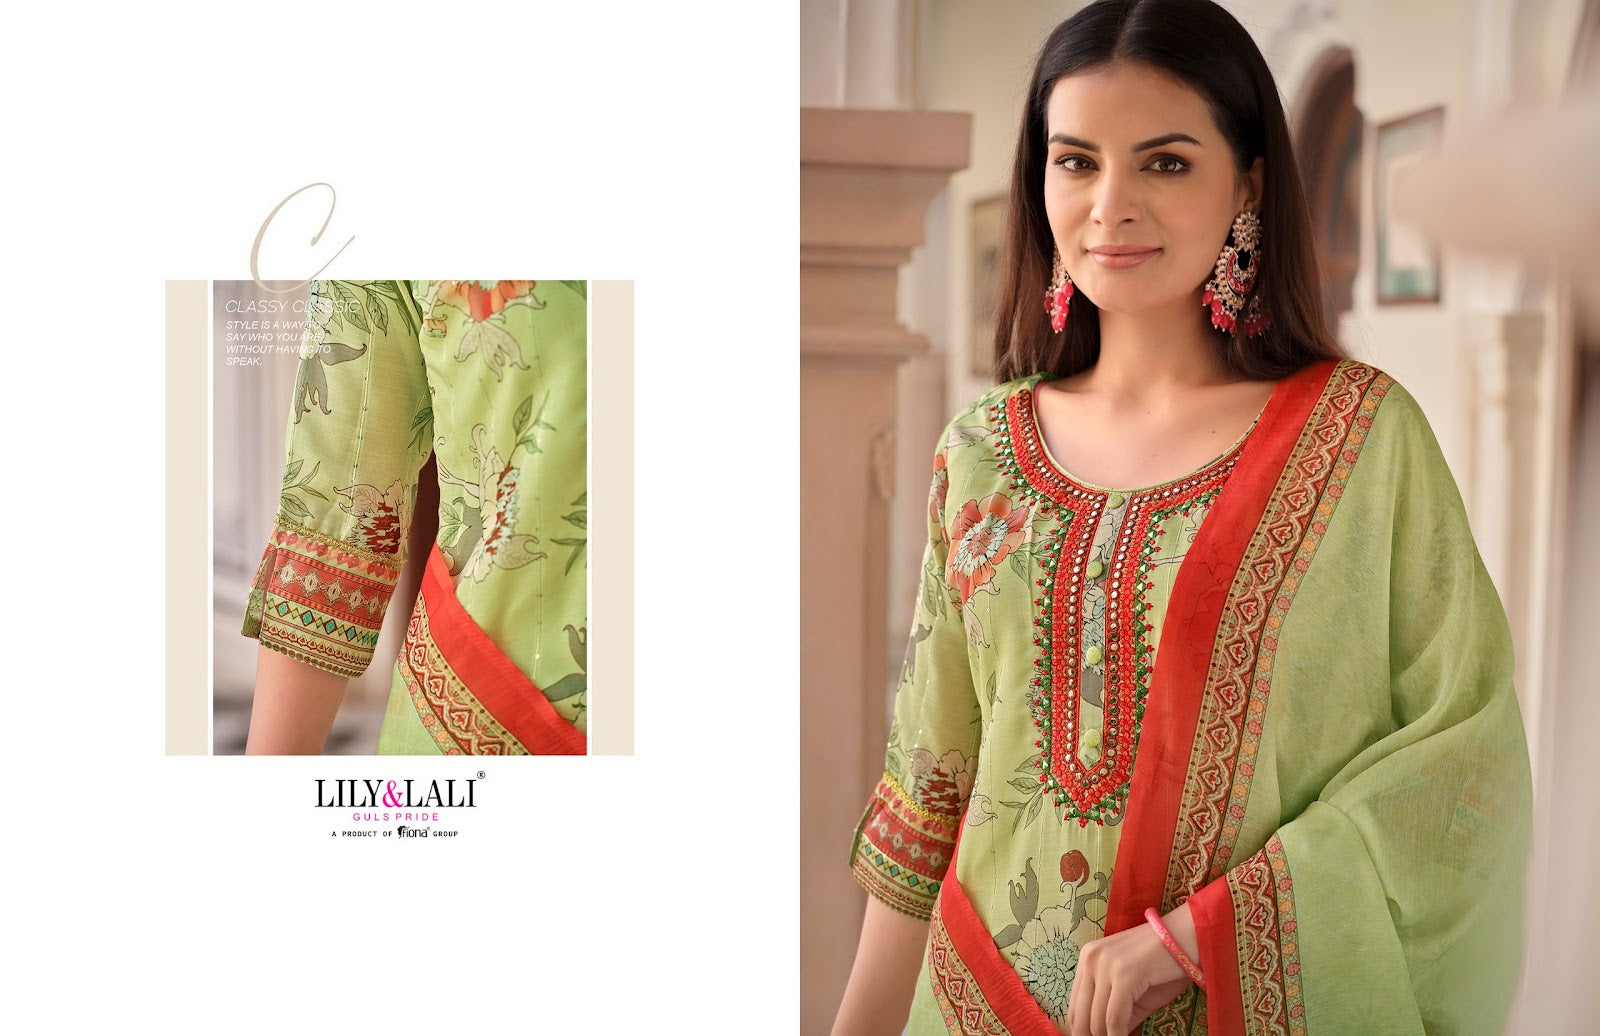 Mehnoor Lily Lali Muslin Silk Afghani Readymade Suit